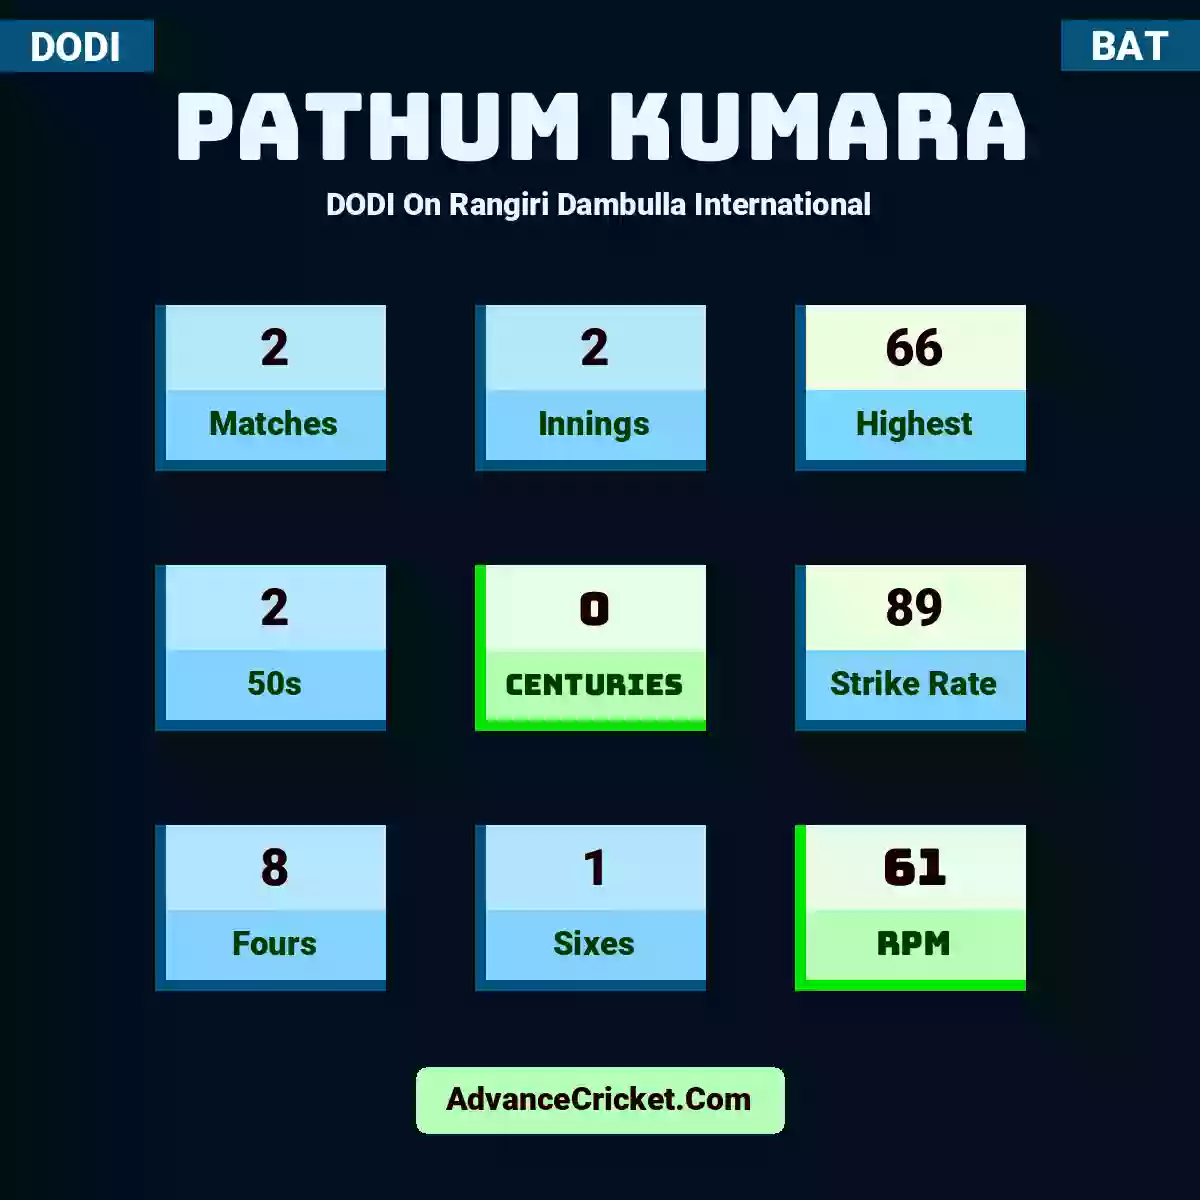 Pathum Kumara DODI  On Rangiri Dambulla International, Pathum Kumara played 2 matches, scored 66 runs as highest, 2 half-centuries, and 0 centuries, with a strike rate of 89. P.Kumara hit 8 fours and 1 sixes, with an RPM of 61.